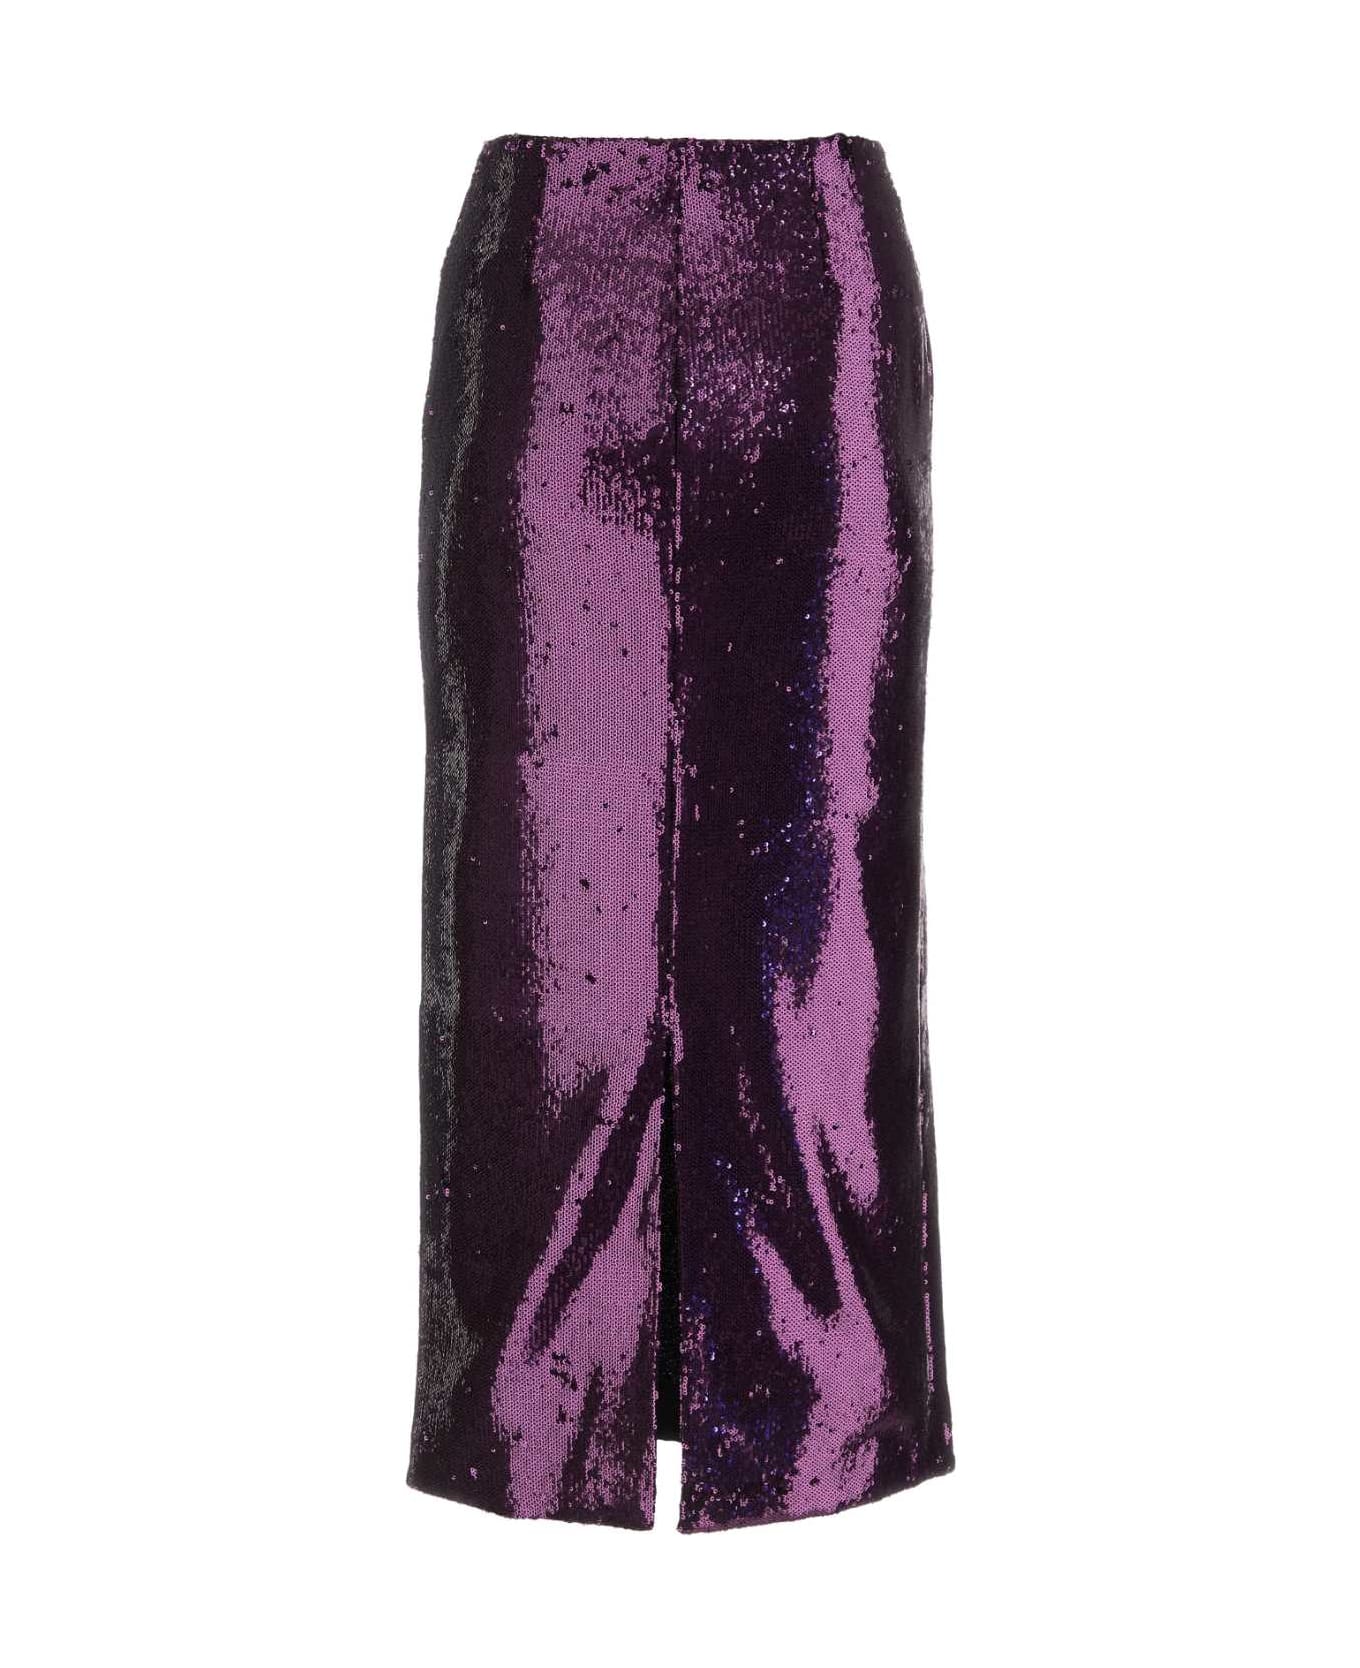 Philosophy di Lorenzo Serafini Purple Sequins Skirt - 0232 スカート